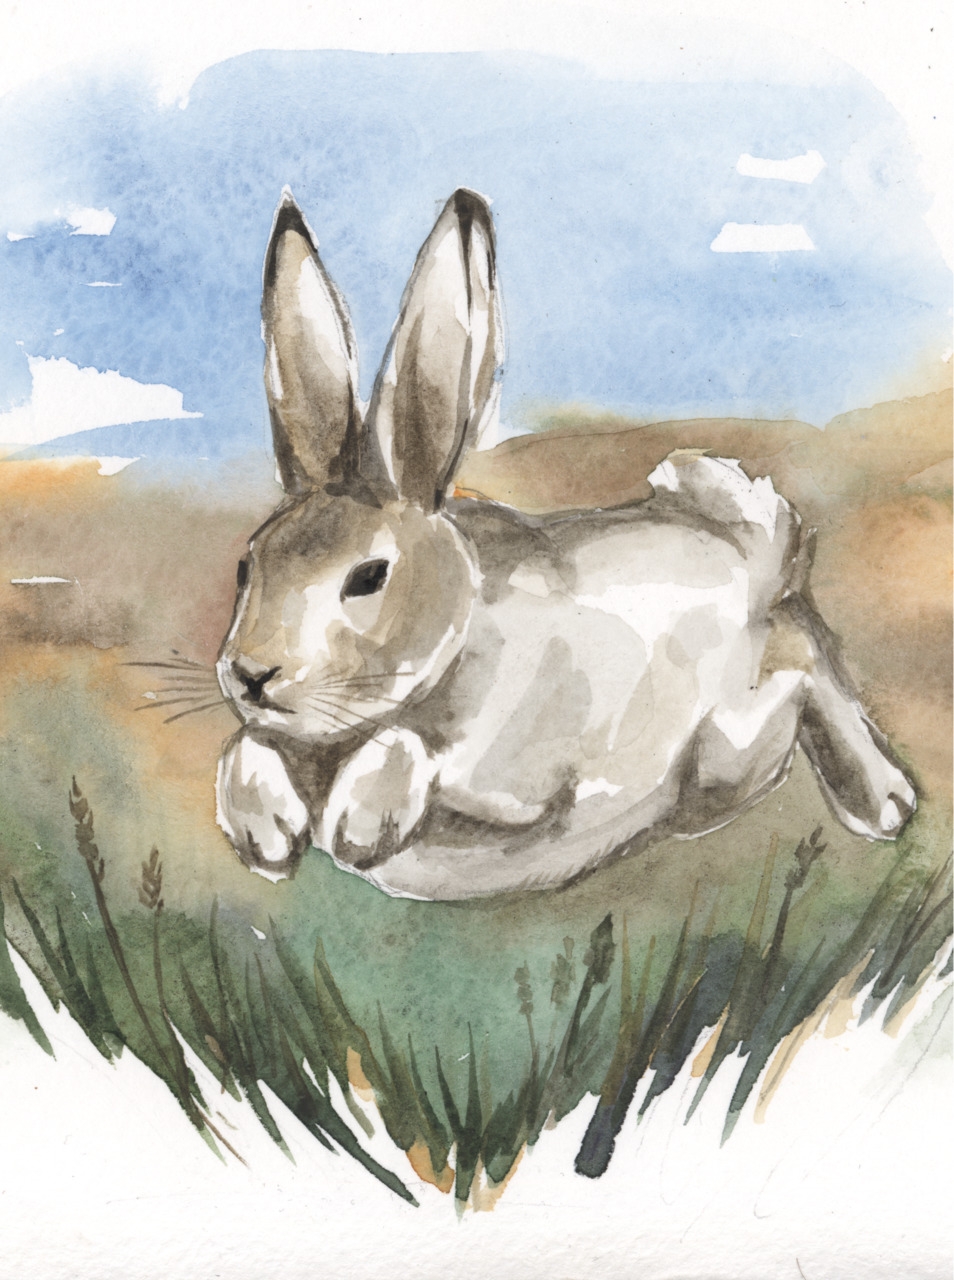 Стихотворение рубцова заяц